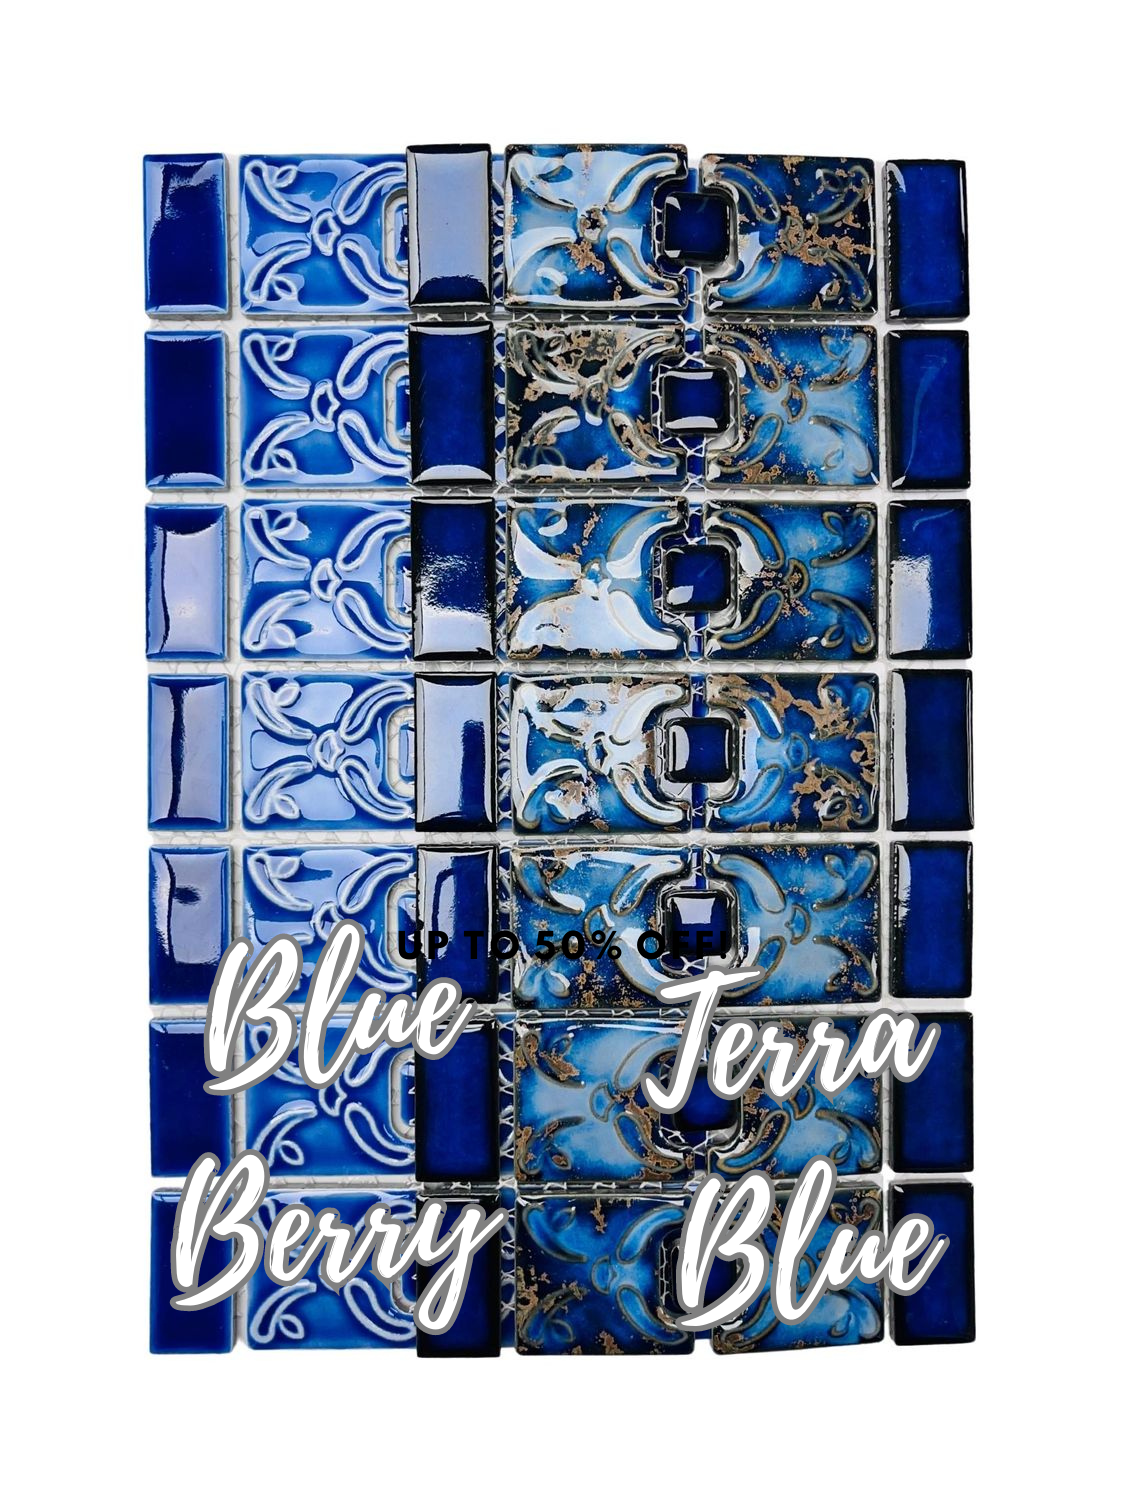 Tenedos Florencia Calacatta Blue Glossy Porcelain Border Pool Wall Floor Tile Backsplash on 6x12 Mesh Mounted Easy Installation for Bathroom, Shower Backsplash, Kitchen, Accent Wall